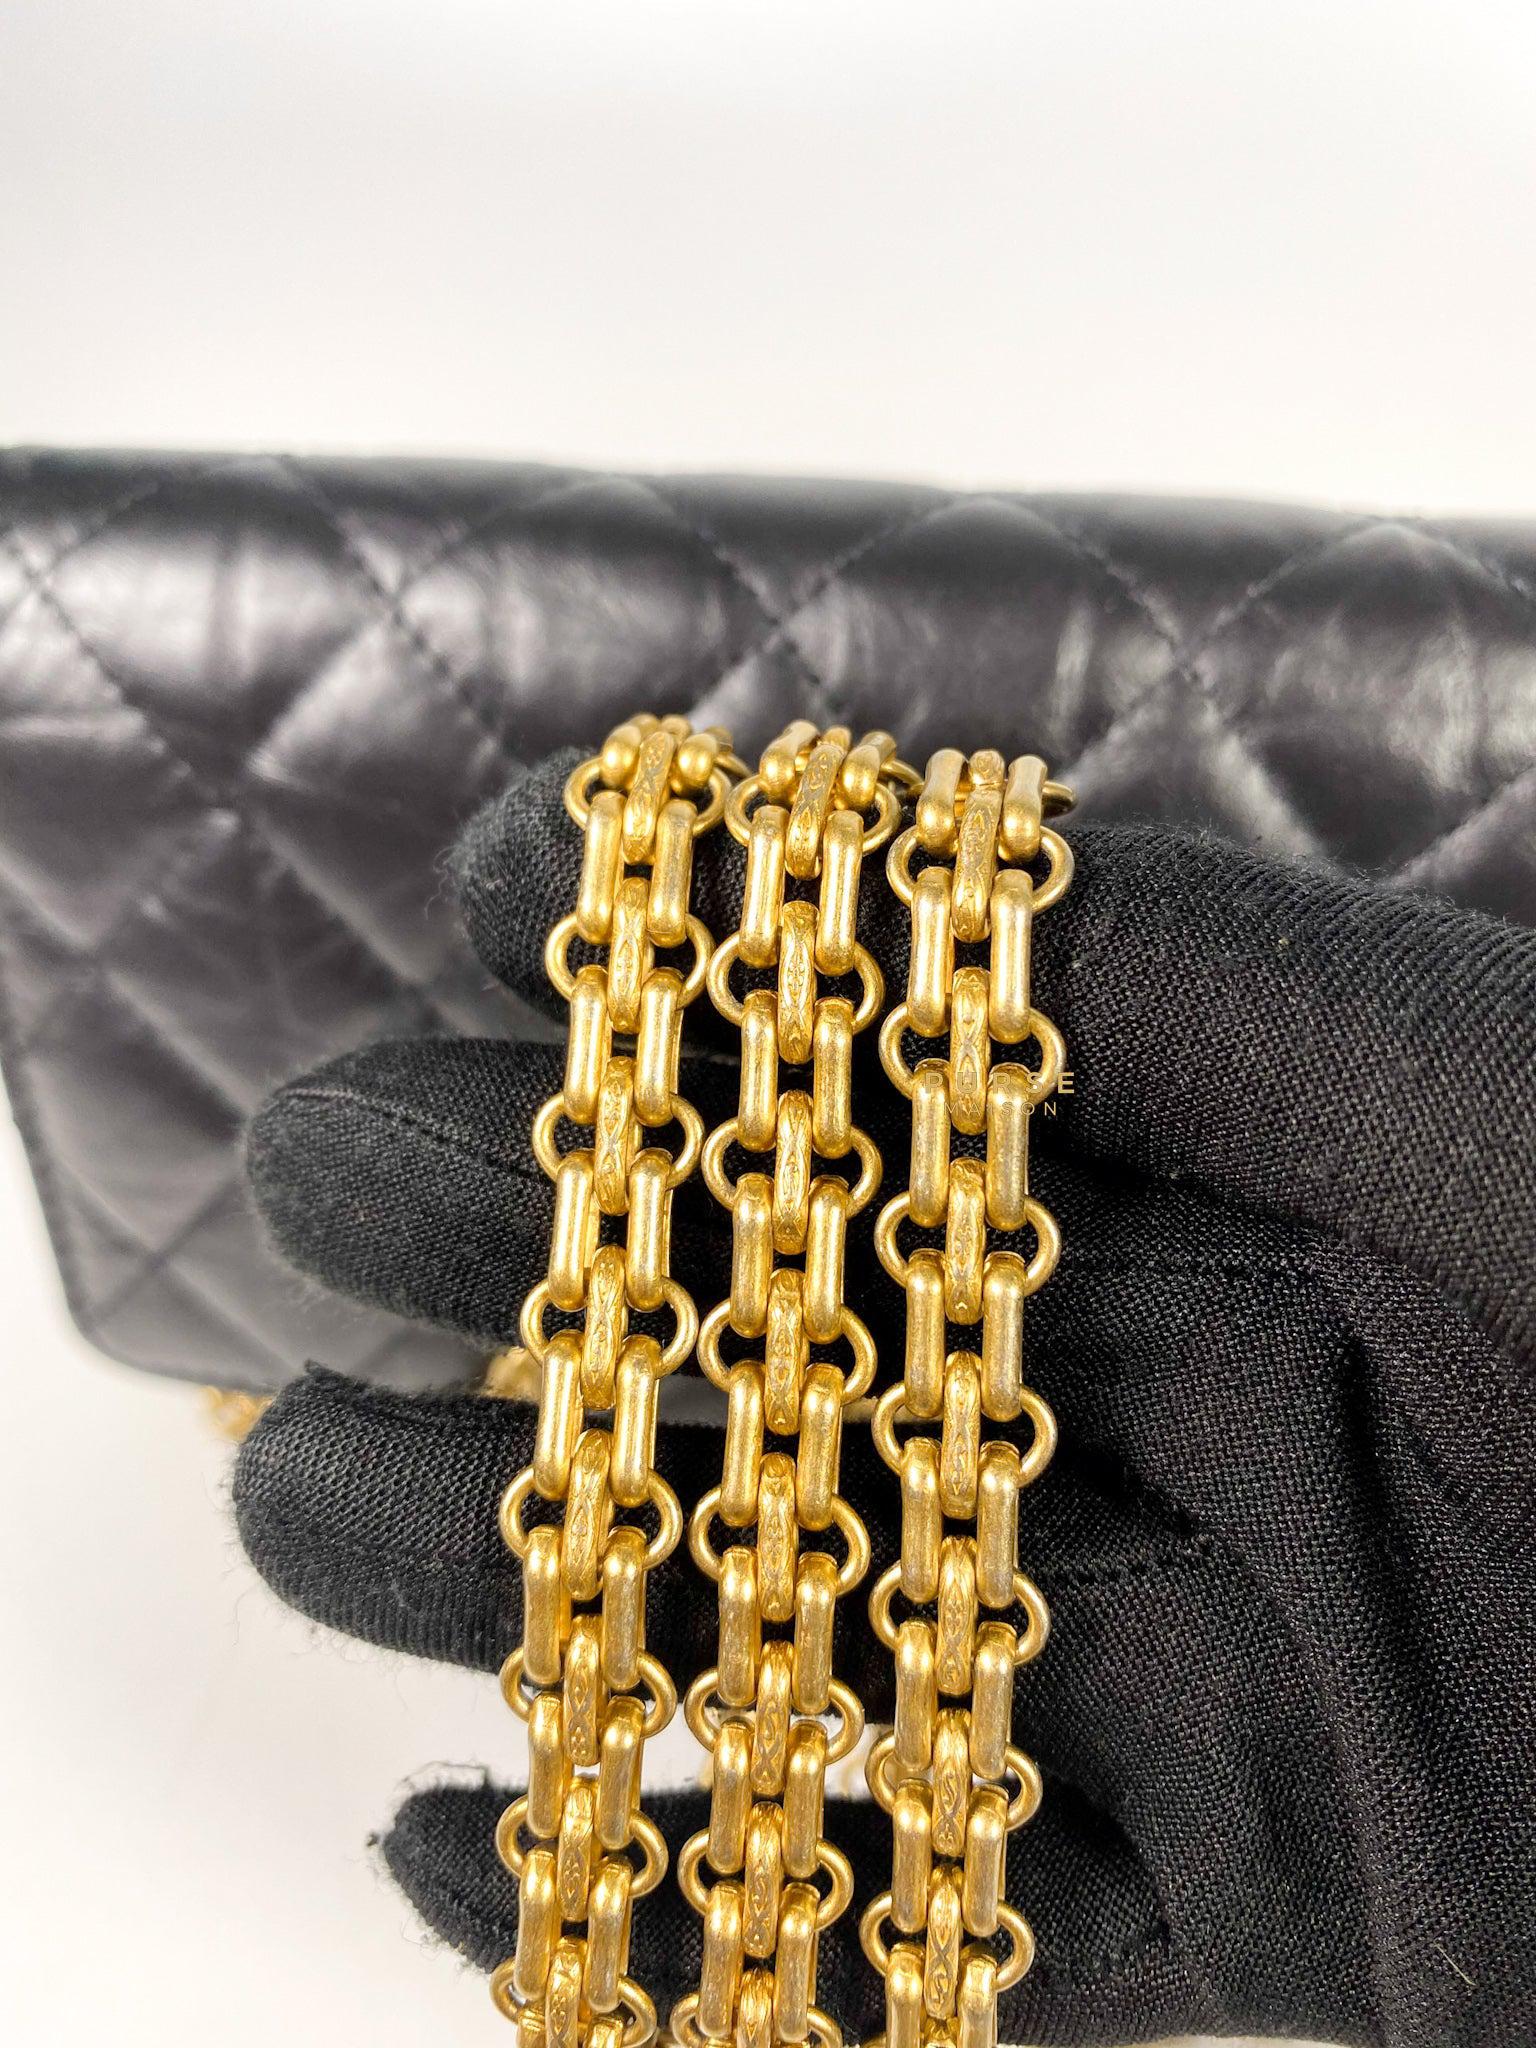 Chanel 2.55 Reissue Wallet on Chain Black Aged Calfskin & Gold Hardware (Microchip)